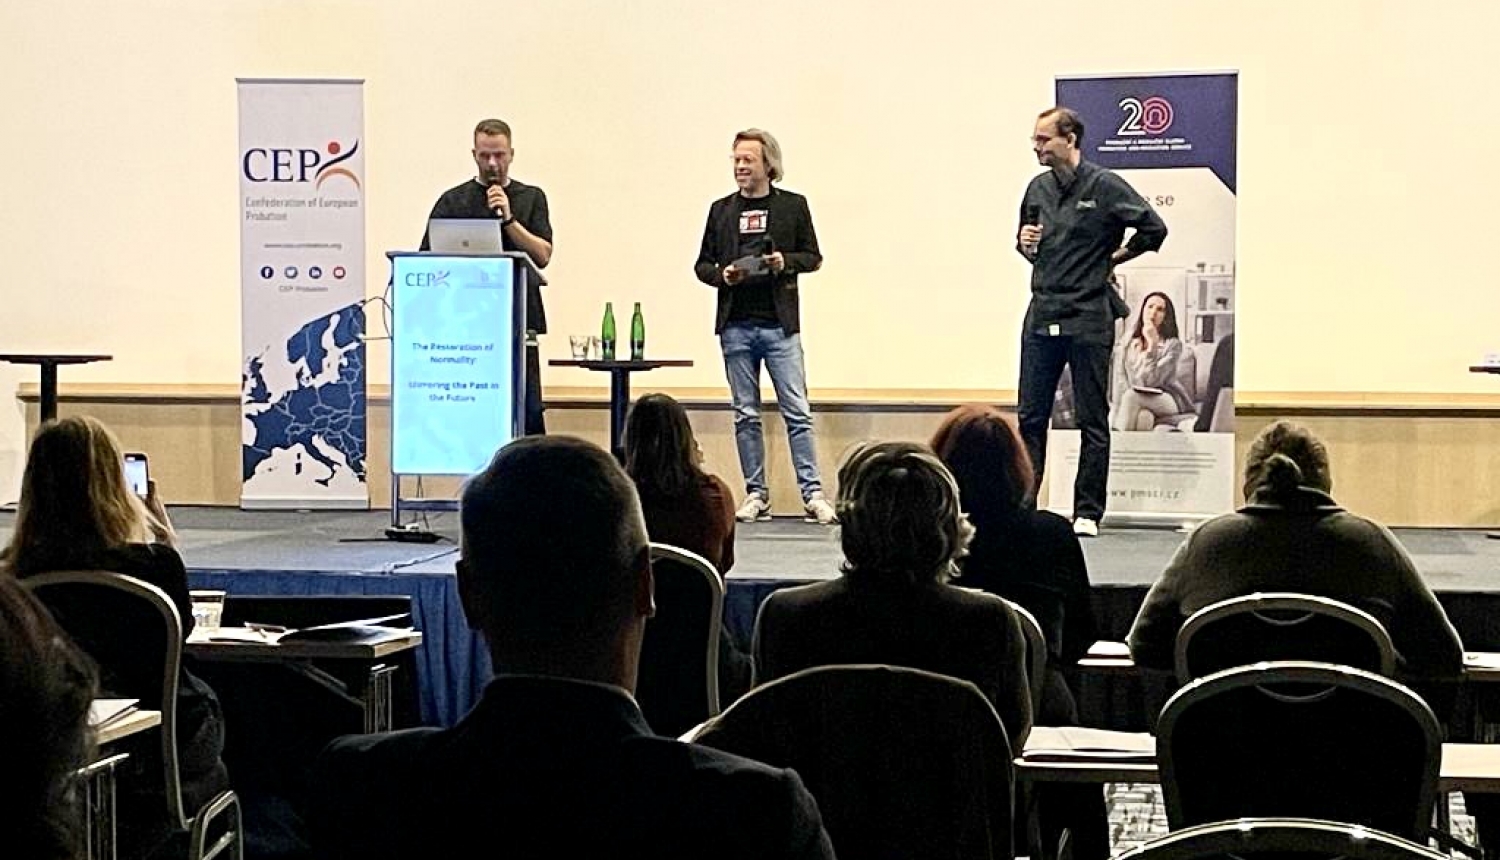 Imants Mozers, Jochum Wilderman, Koen Goei uzstājas konferencē